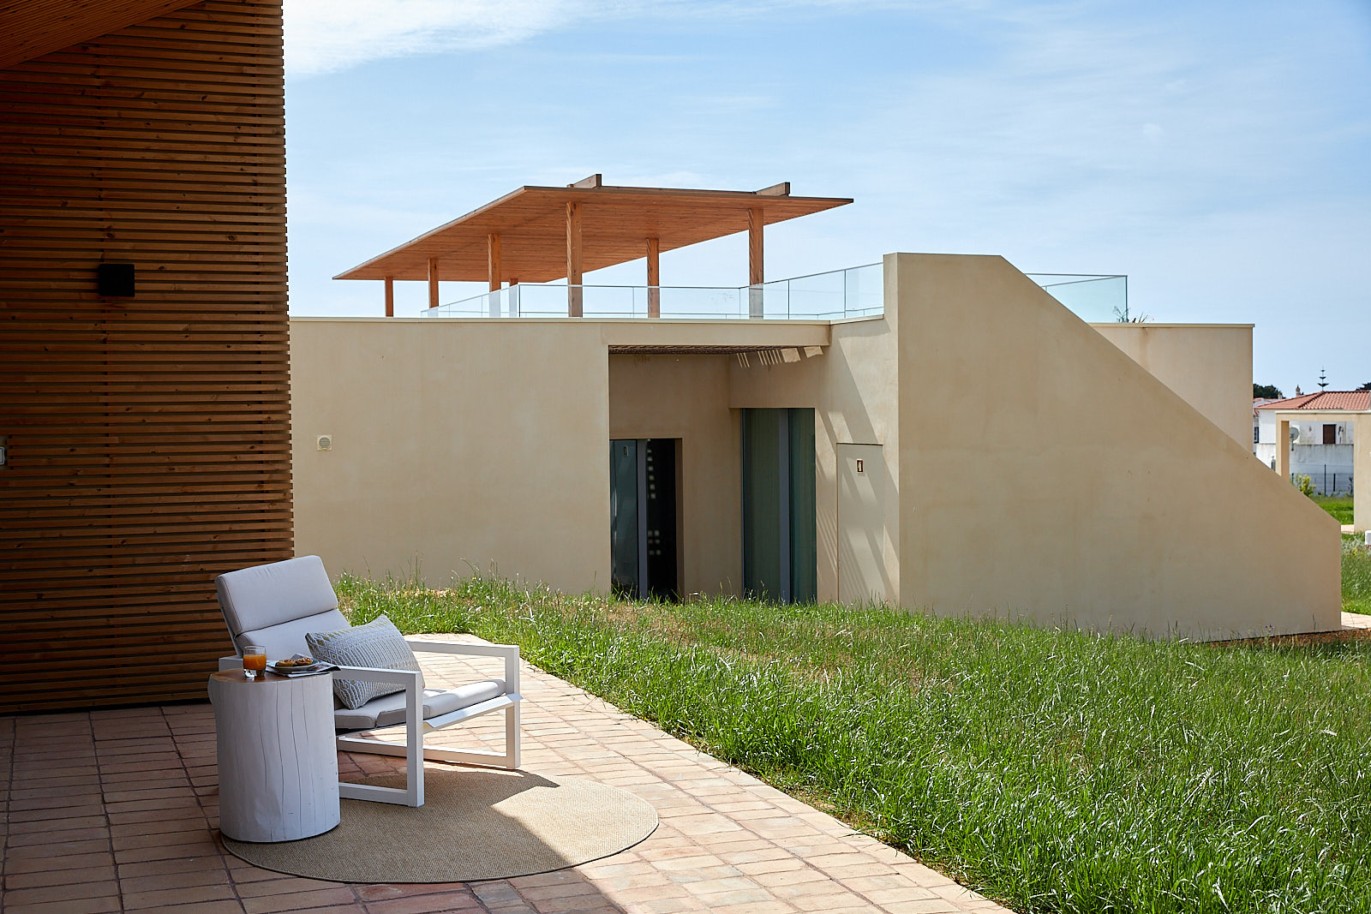 2 bedroom apartment in resort, for sale in Porches, Algarve_230648